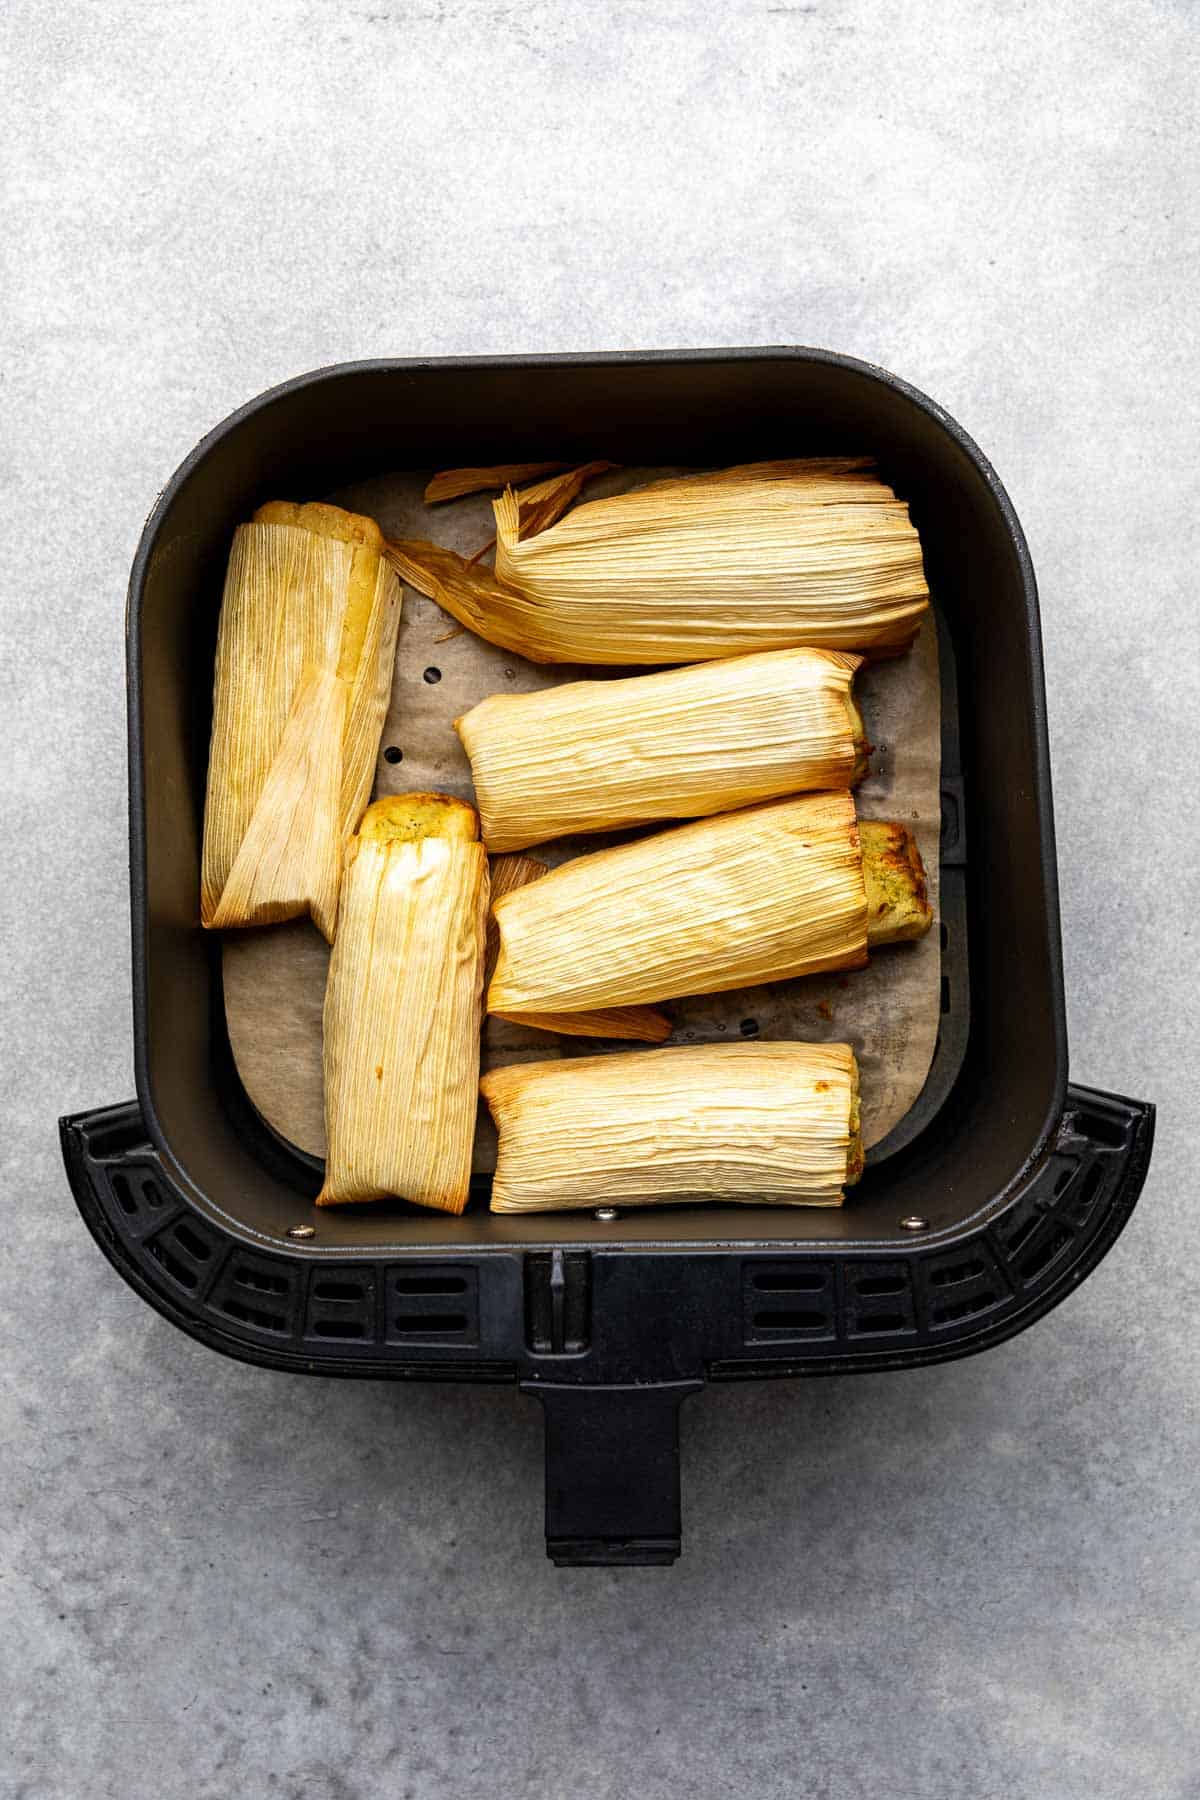 Tamales arranged in an air fryer basket.